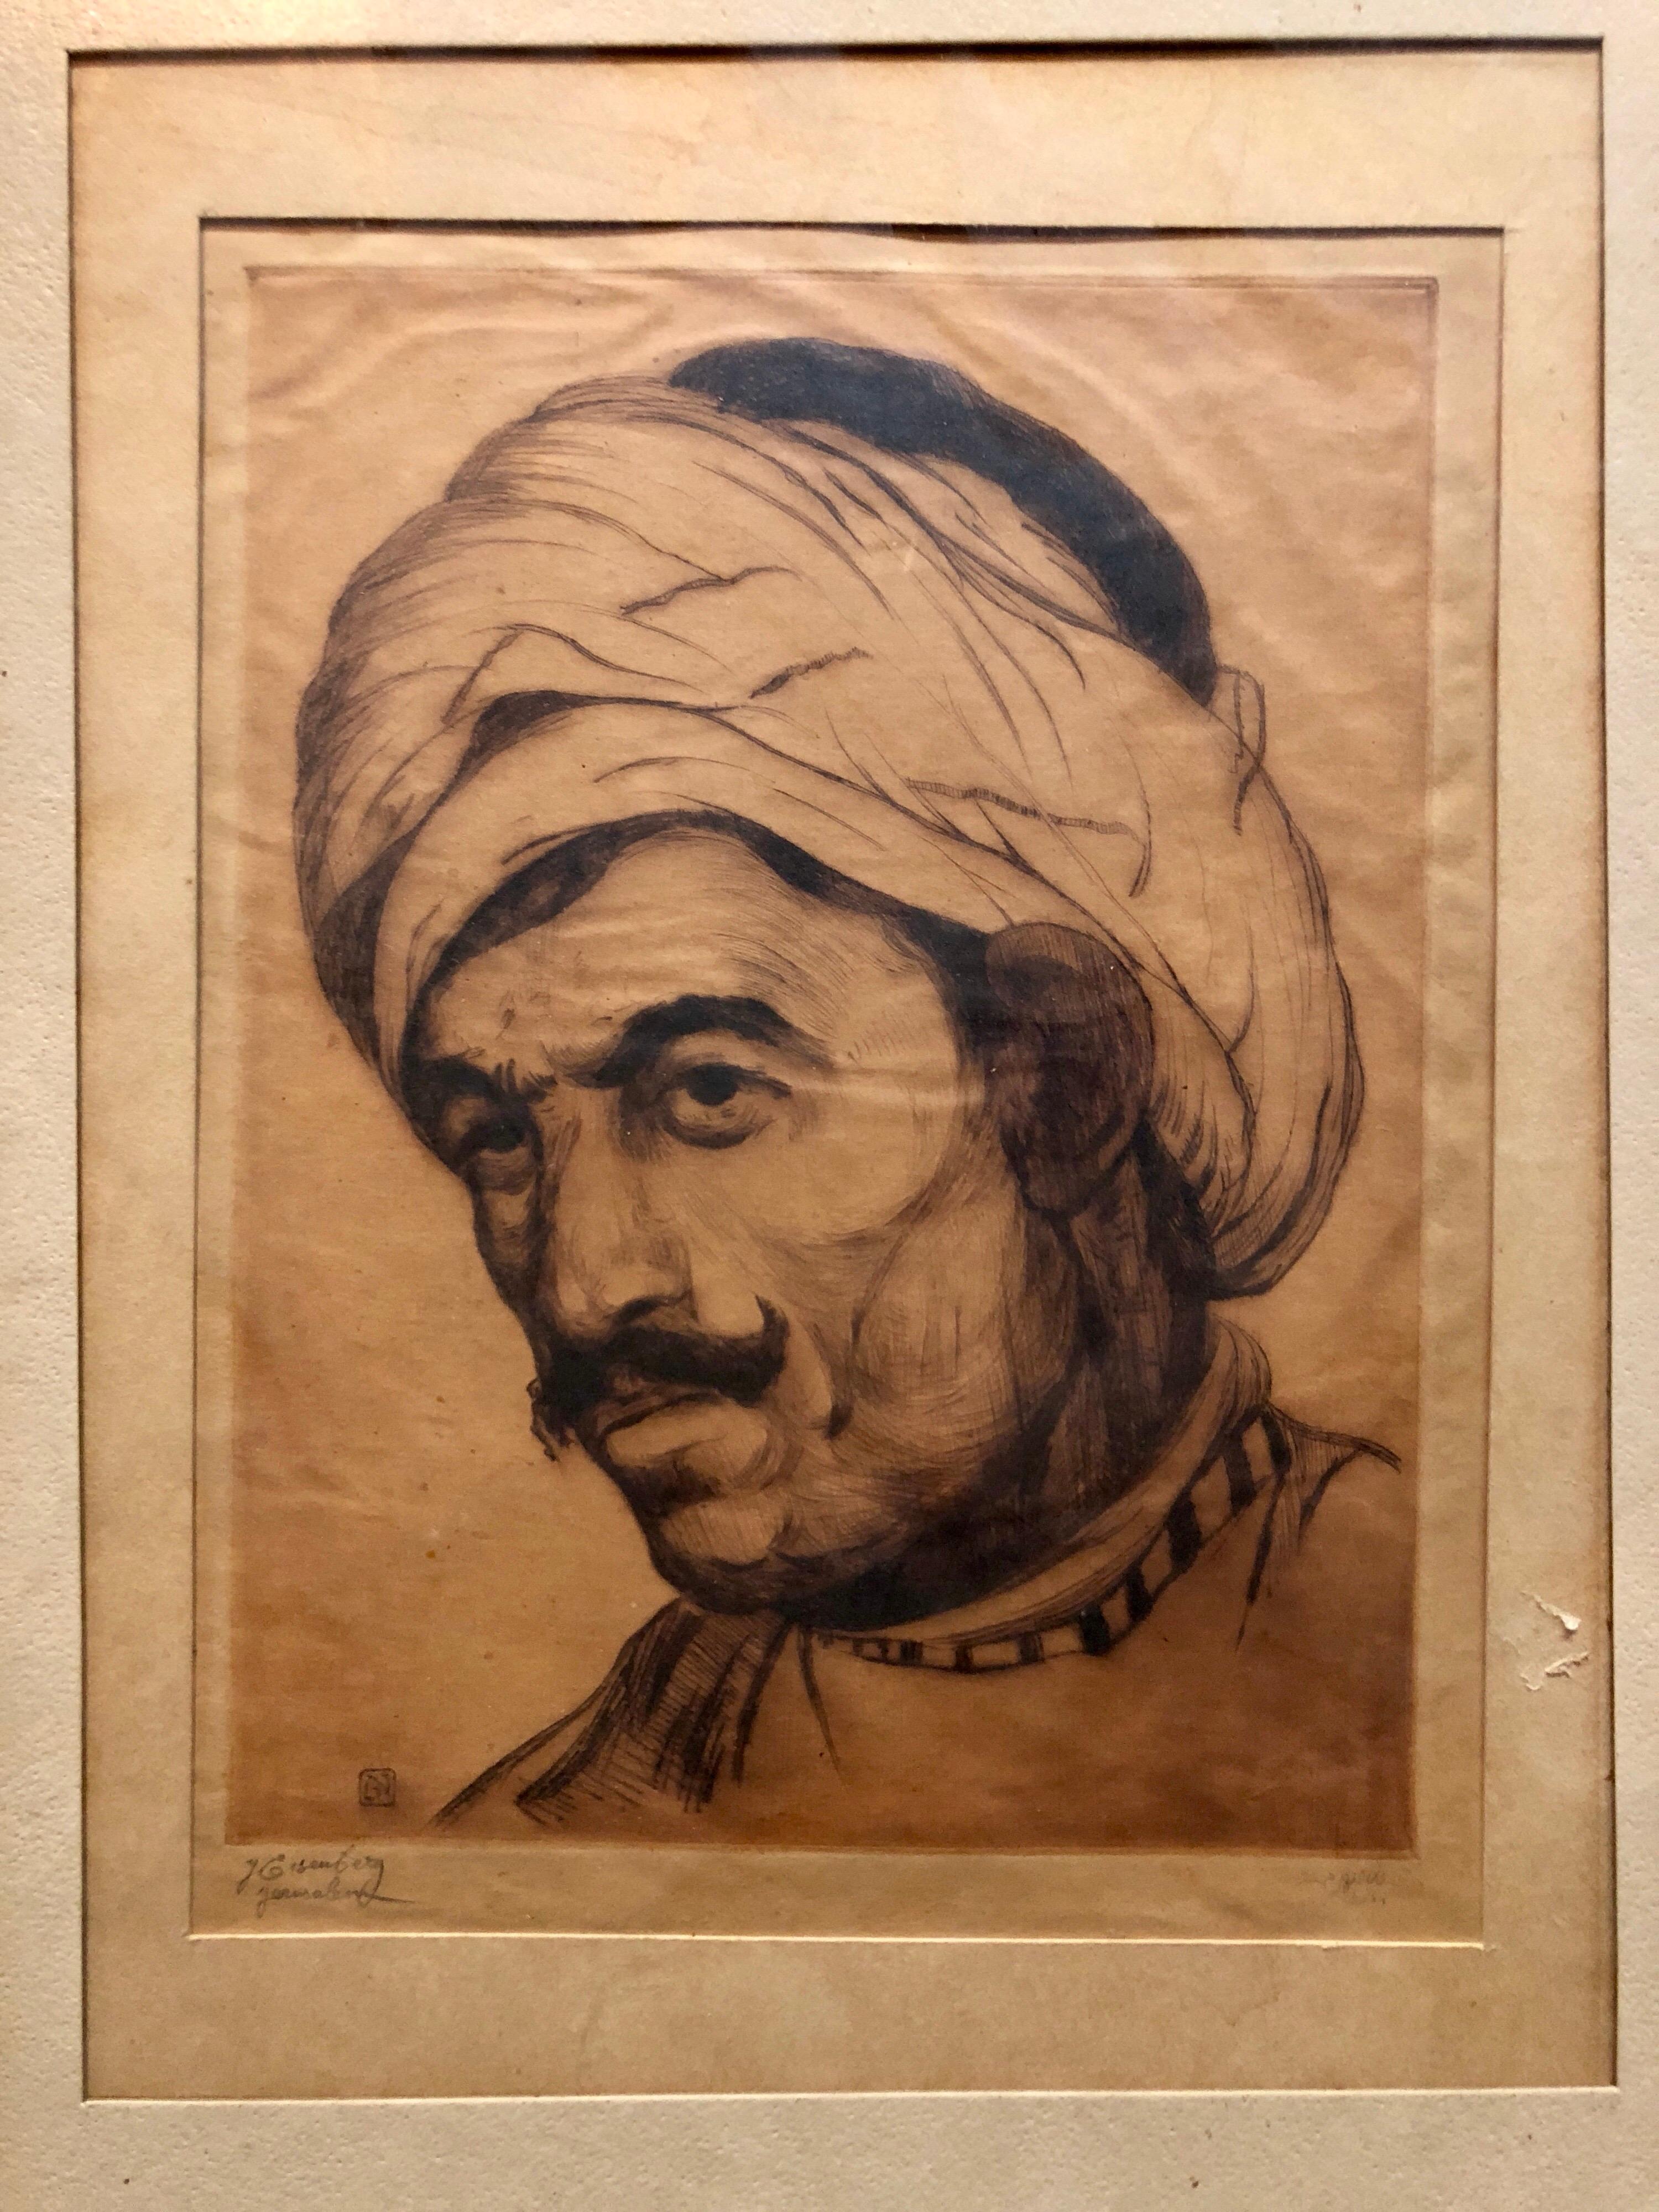 Bezalel School Jerusalem, Middle Eastern Arab Man in Turban Circa 1920s Etching - Print by Jacob Eisenberg